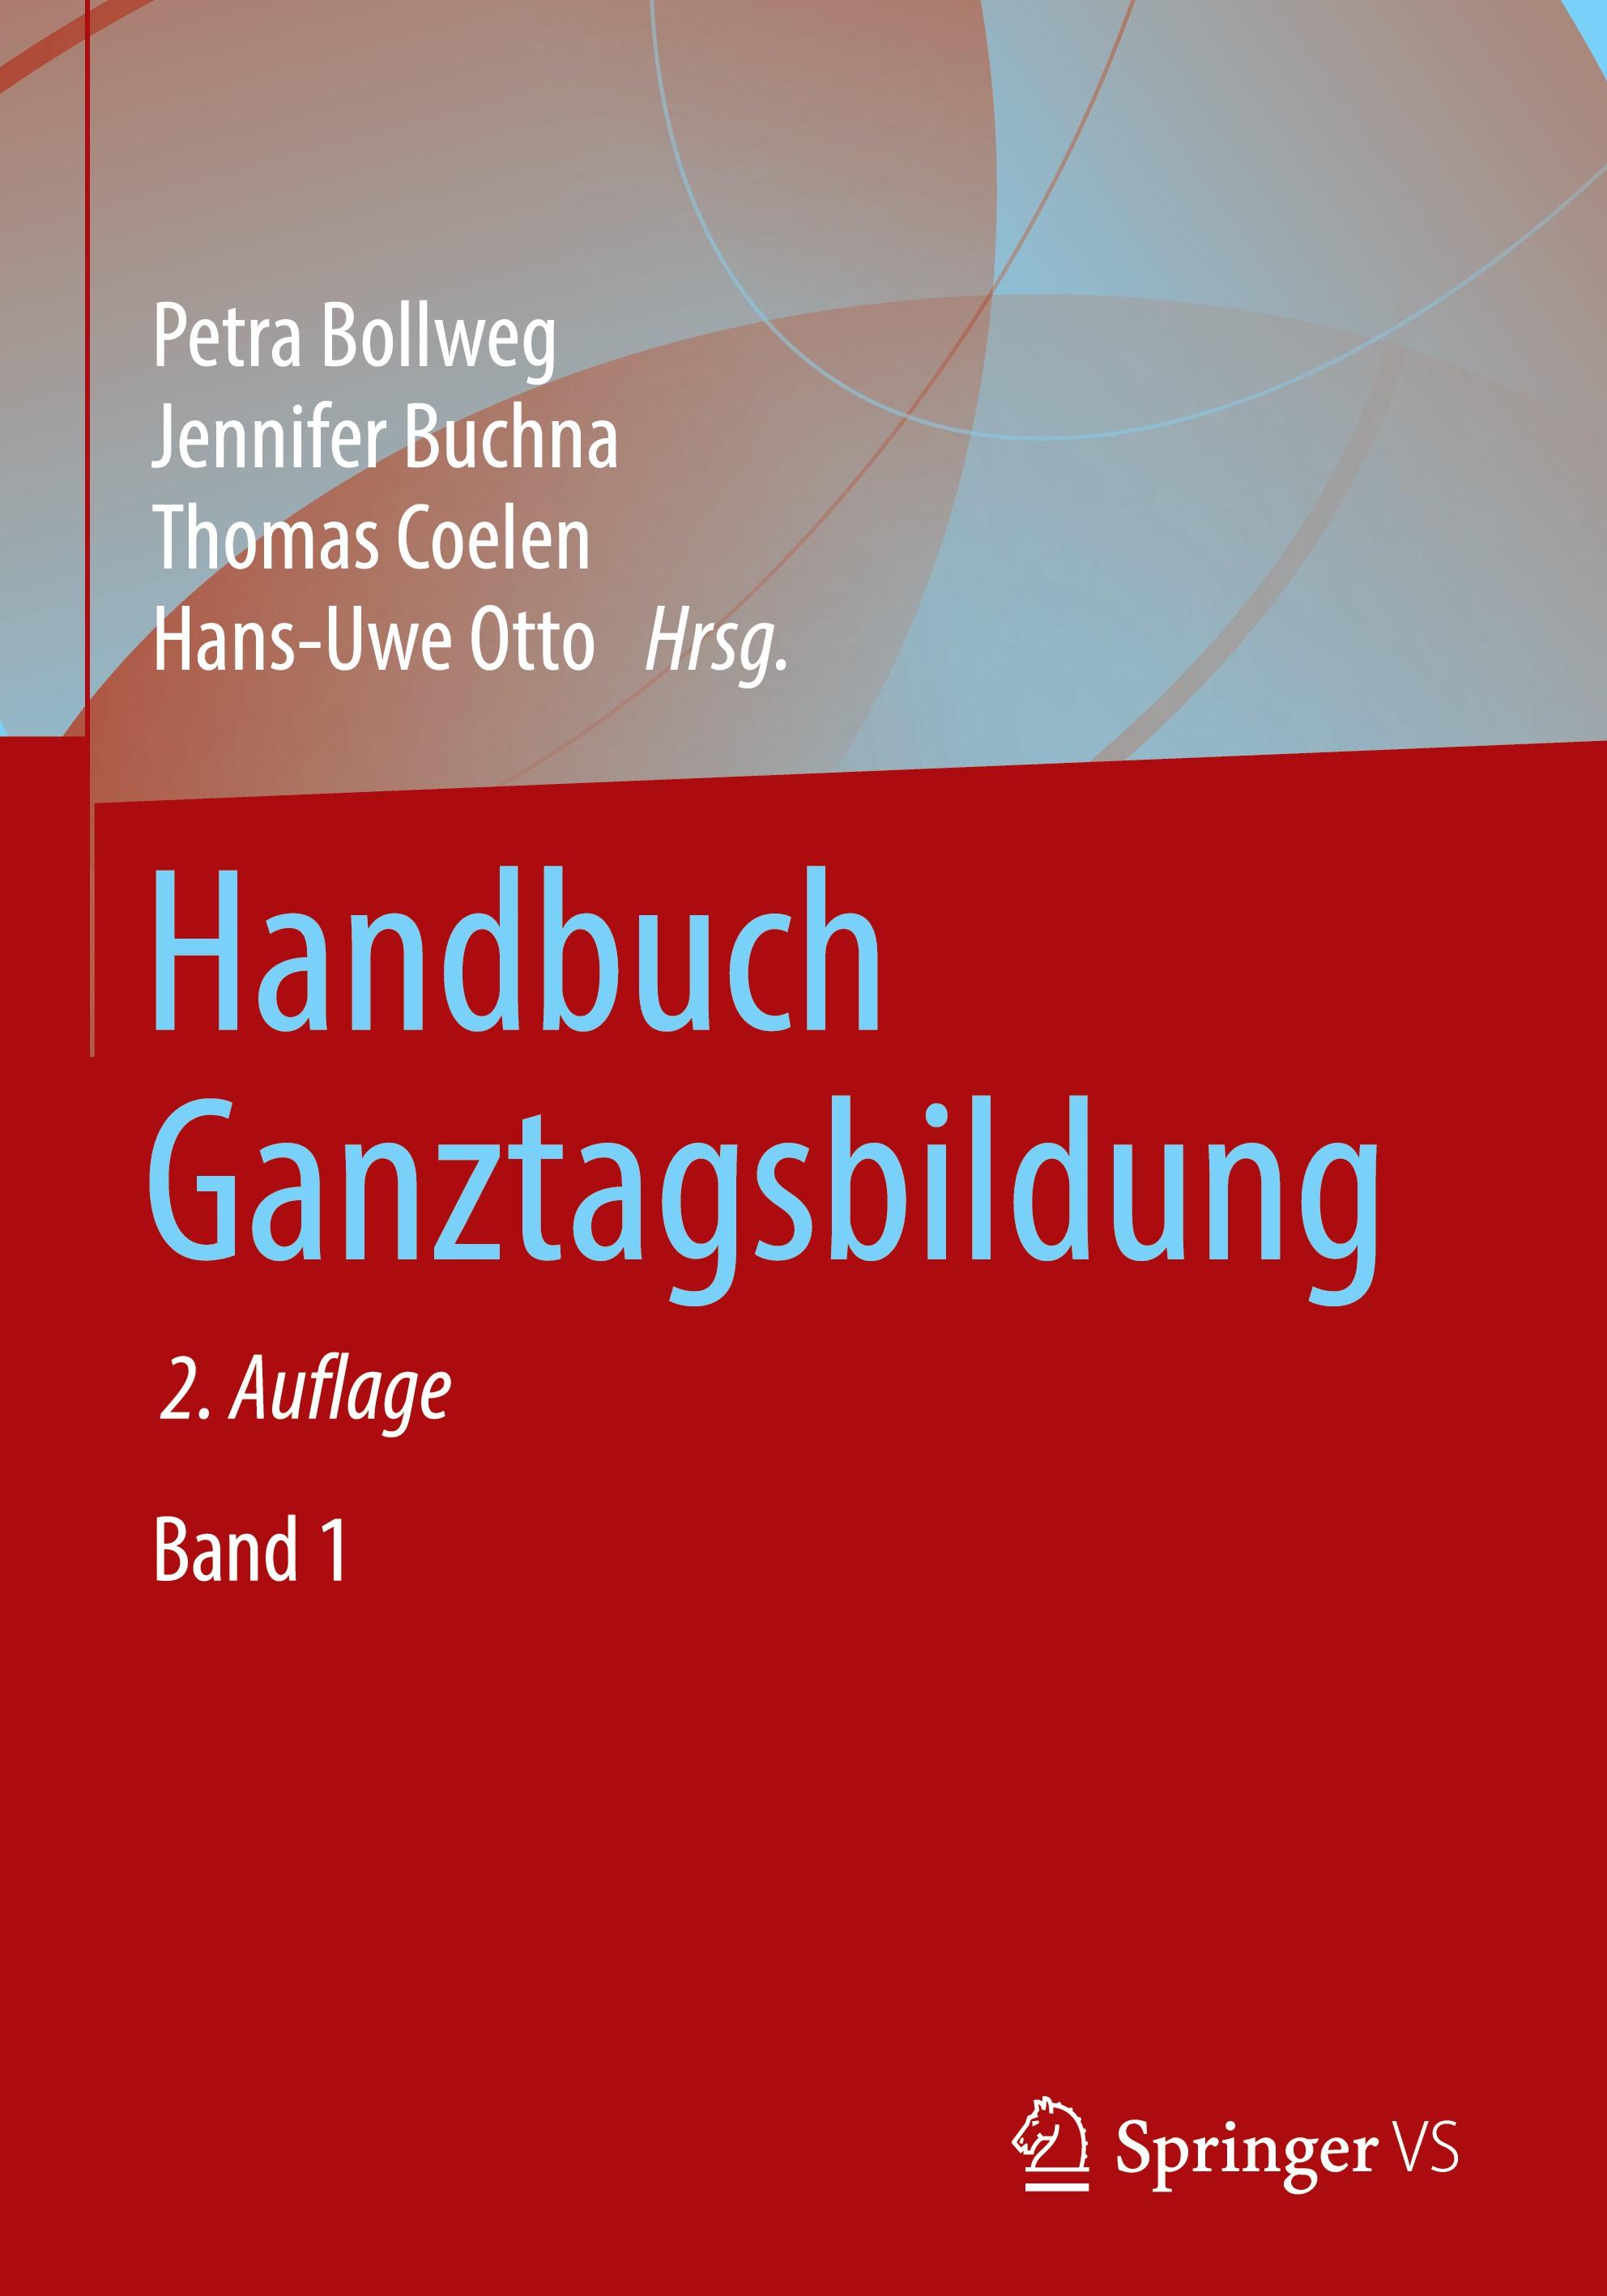 Handbuch Ganztagsbildung - Coelen, Thomas|Otto, Hans-Uwe|Bollweg, Petra|Buchna, Jennifer